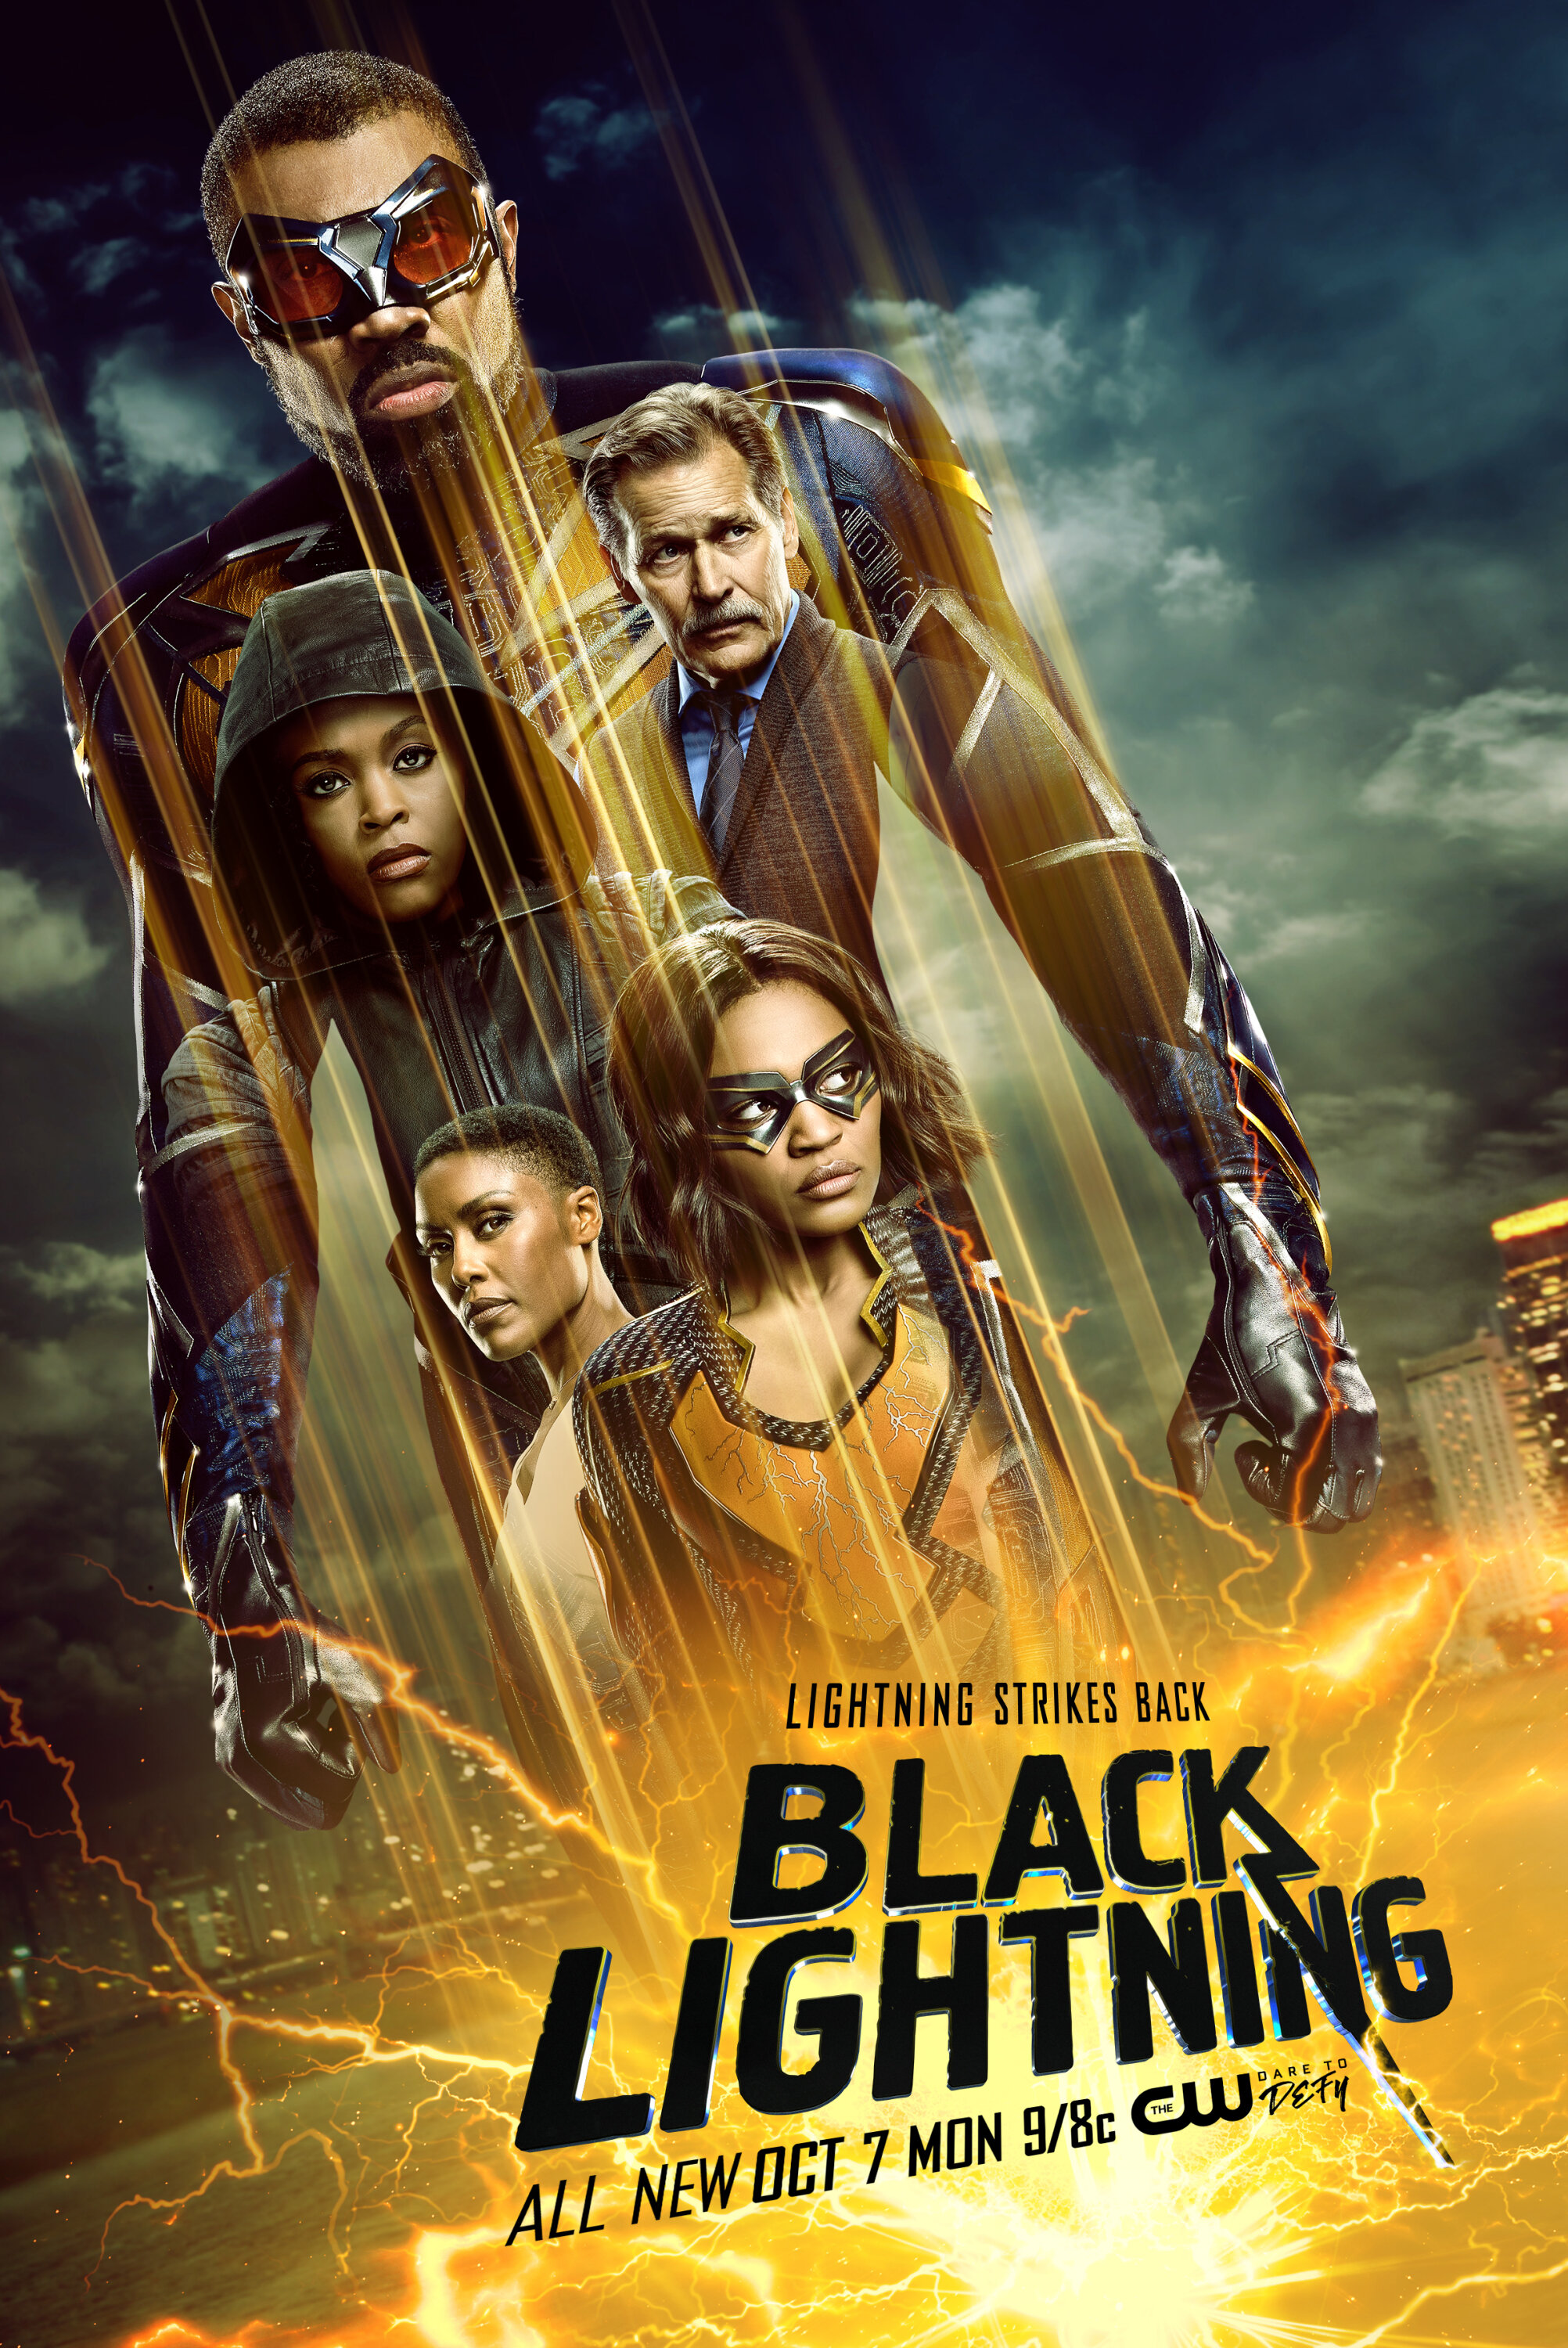 Promotional Material for "Black Lightning"